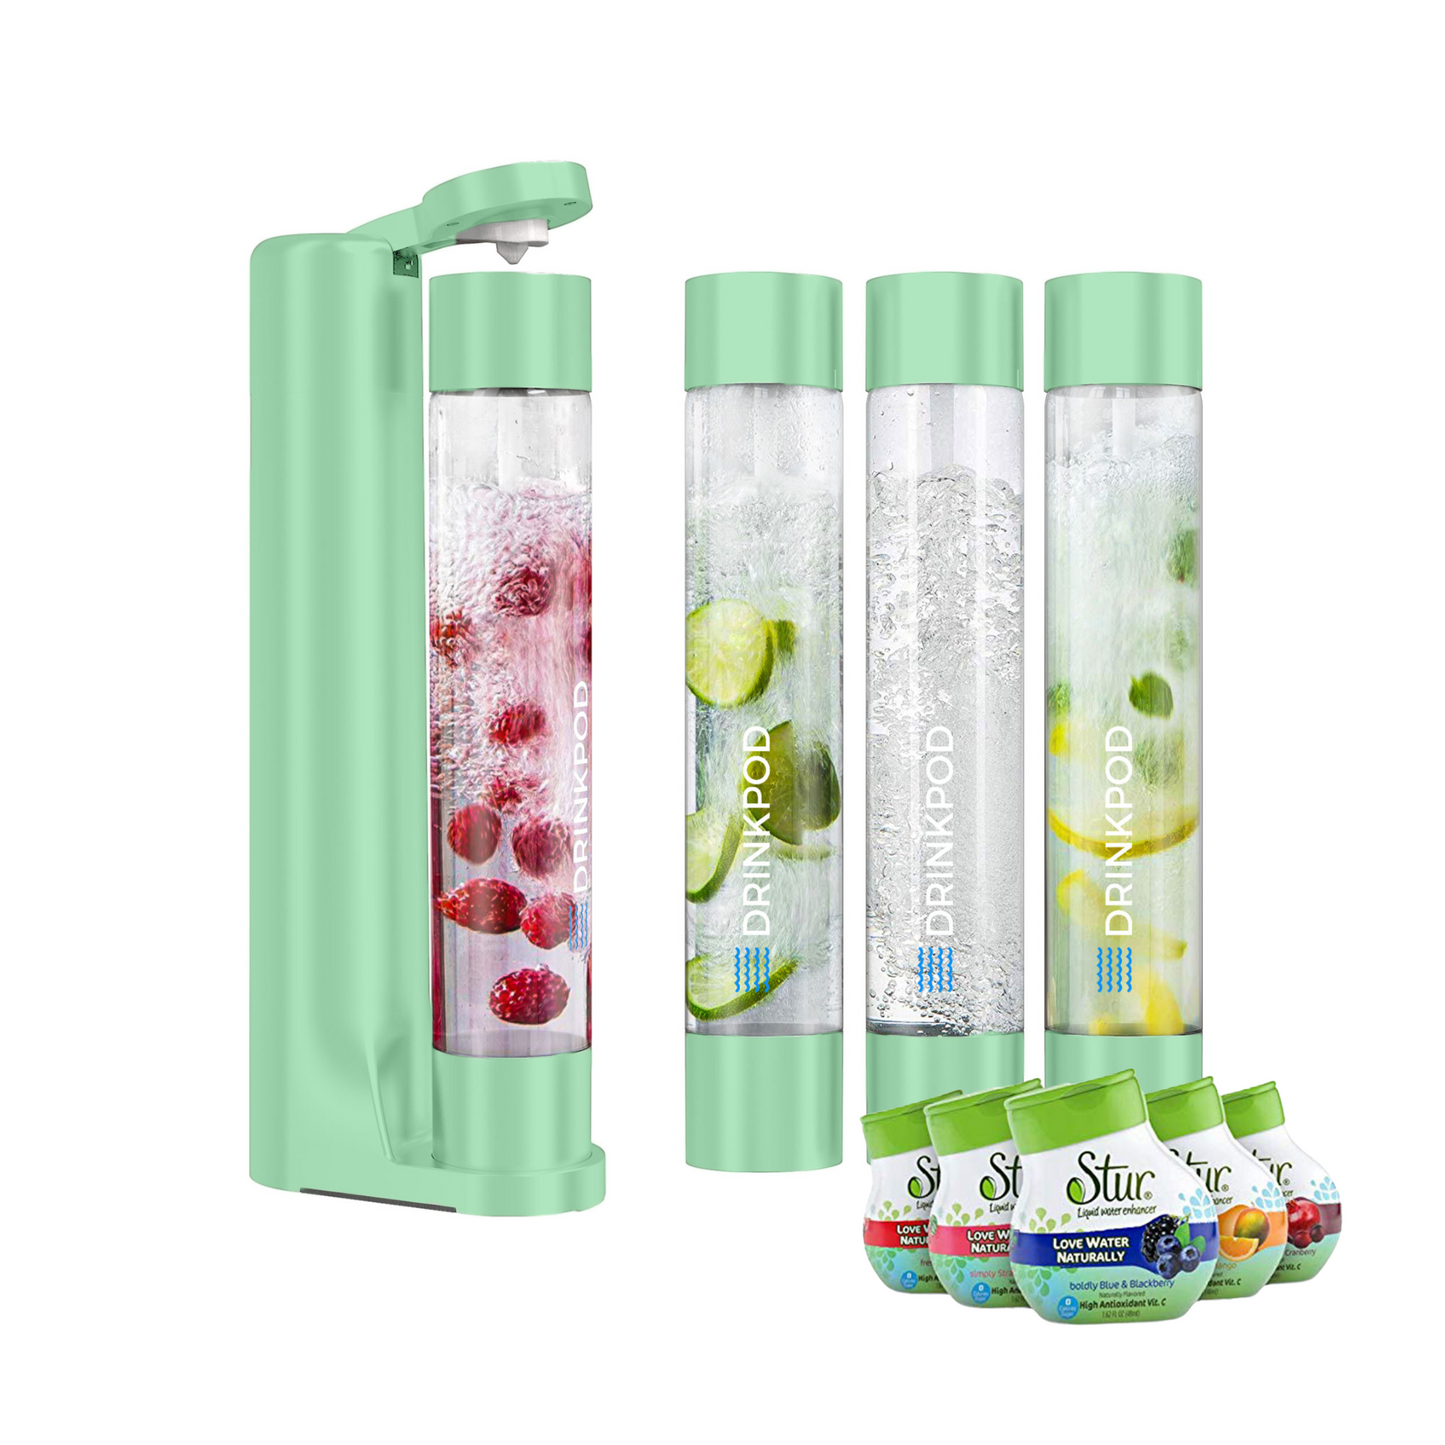 FIZZPod 1+ Soda Maker + Stur Water Flavor Enhancemer Pack by Drinkpod